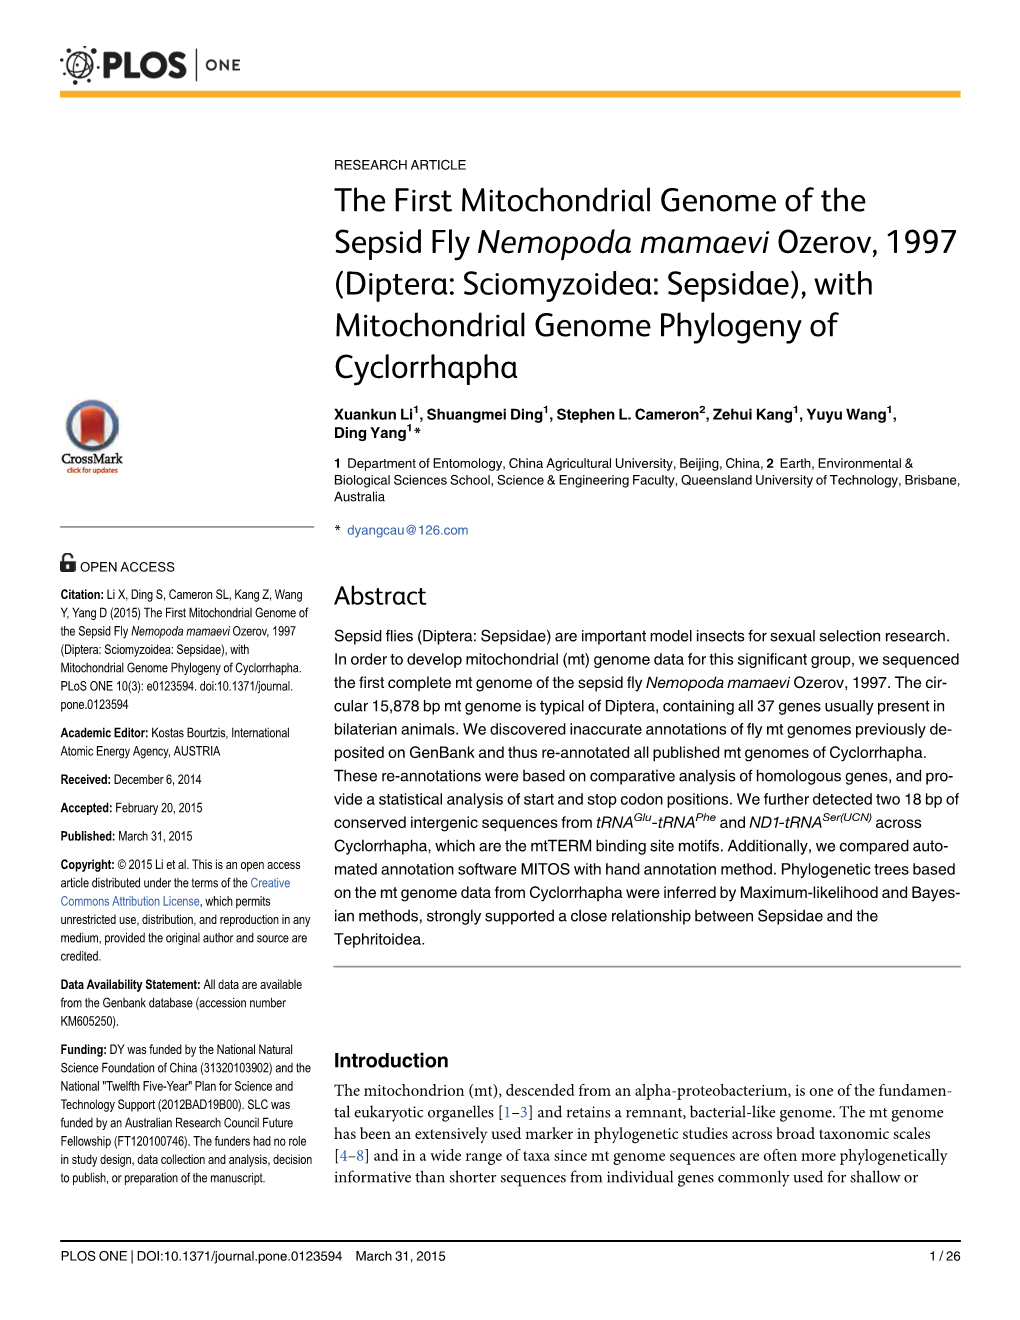 The First Mitochondrial Genome of the Sepsid Fly Nemopoda Mamaevi Ozerov, 1997 (Diptera: Sciomyzoidea: Sepsidae), with Mitochondrial Genome Phylogeny of Cyclorrhapha